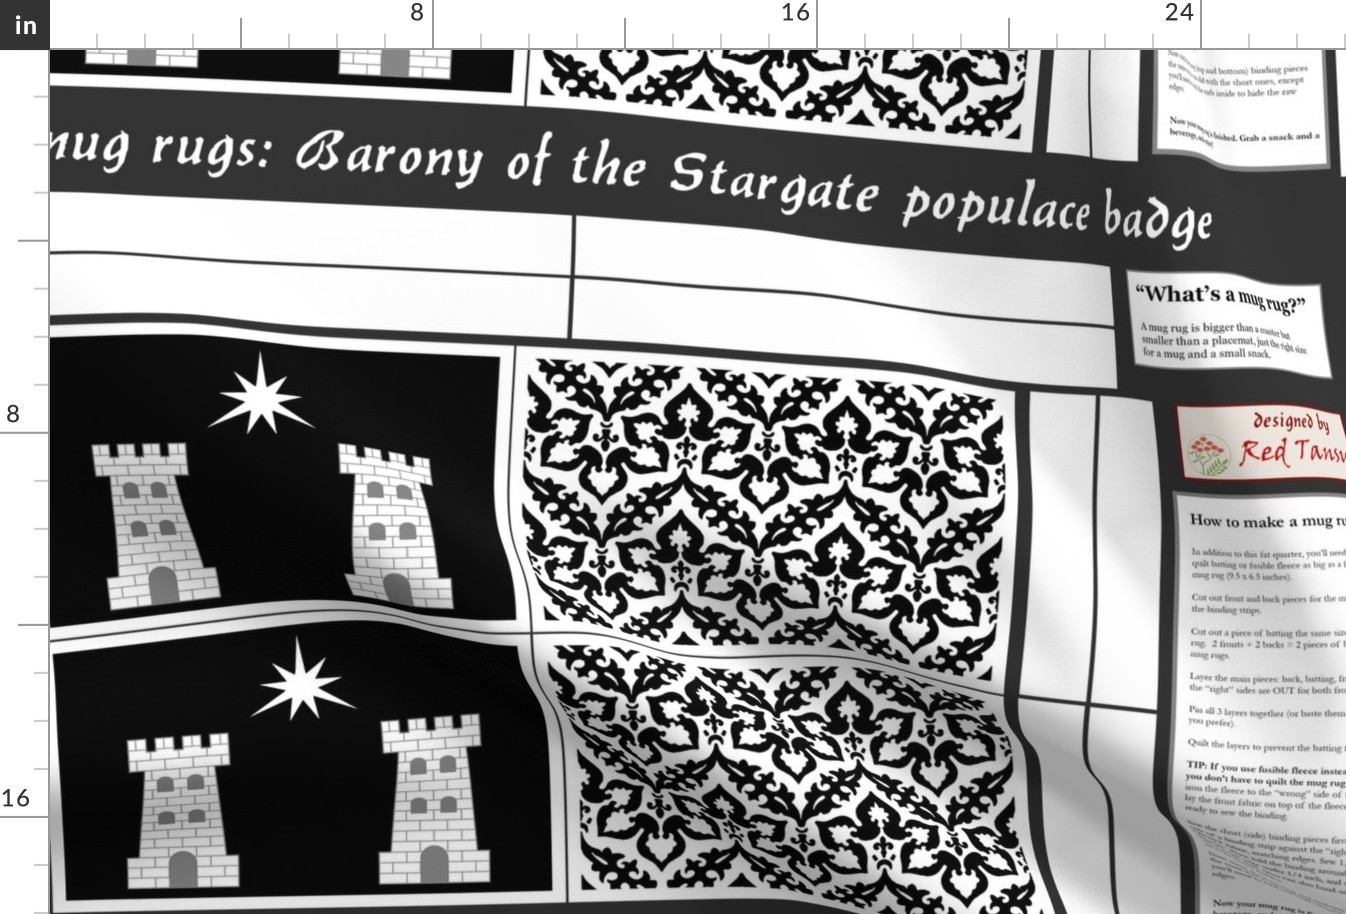 mug rugs: Barony of the Stargate (SCA)